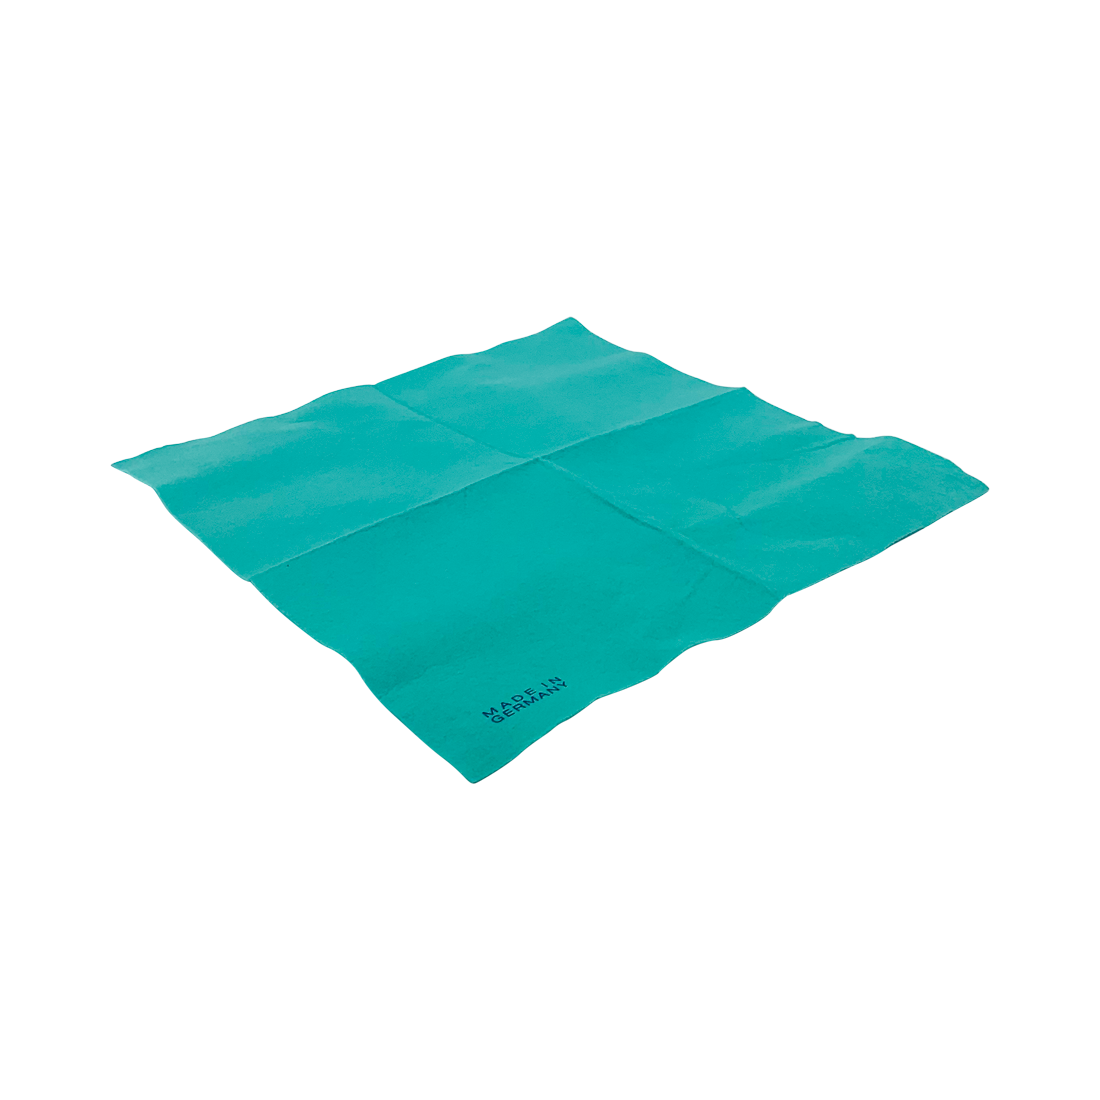 Vlies-Allzwecktuch ca. 110g/m², 300 Stück/Karton, grün, 38 x 38 cm